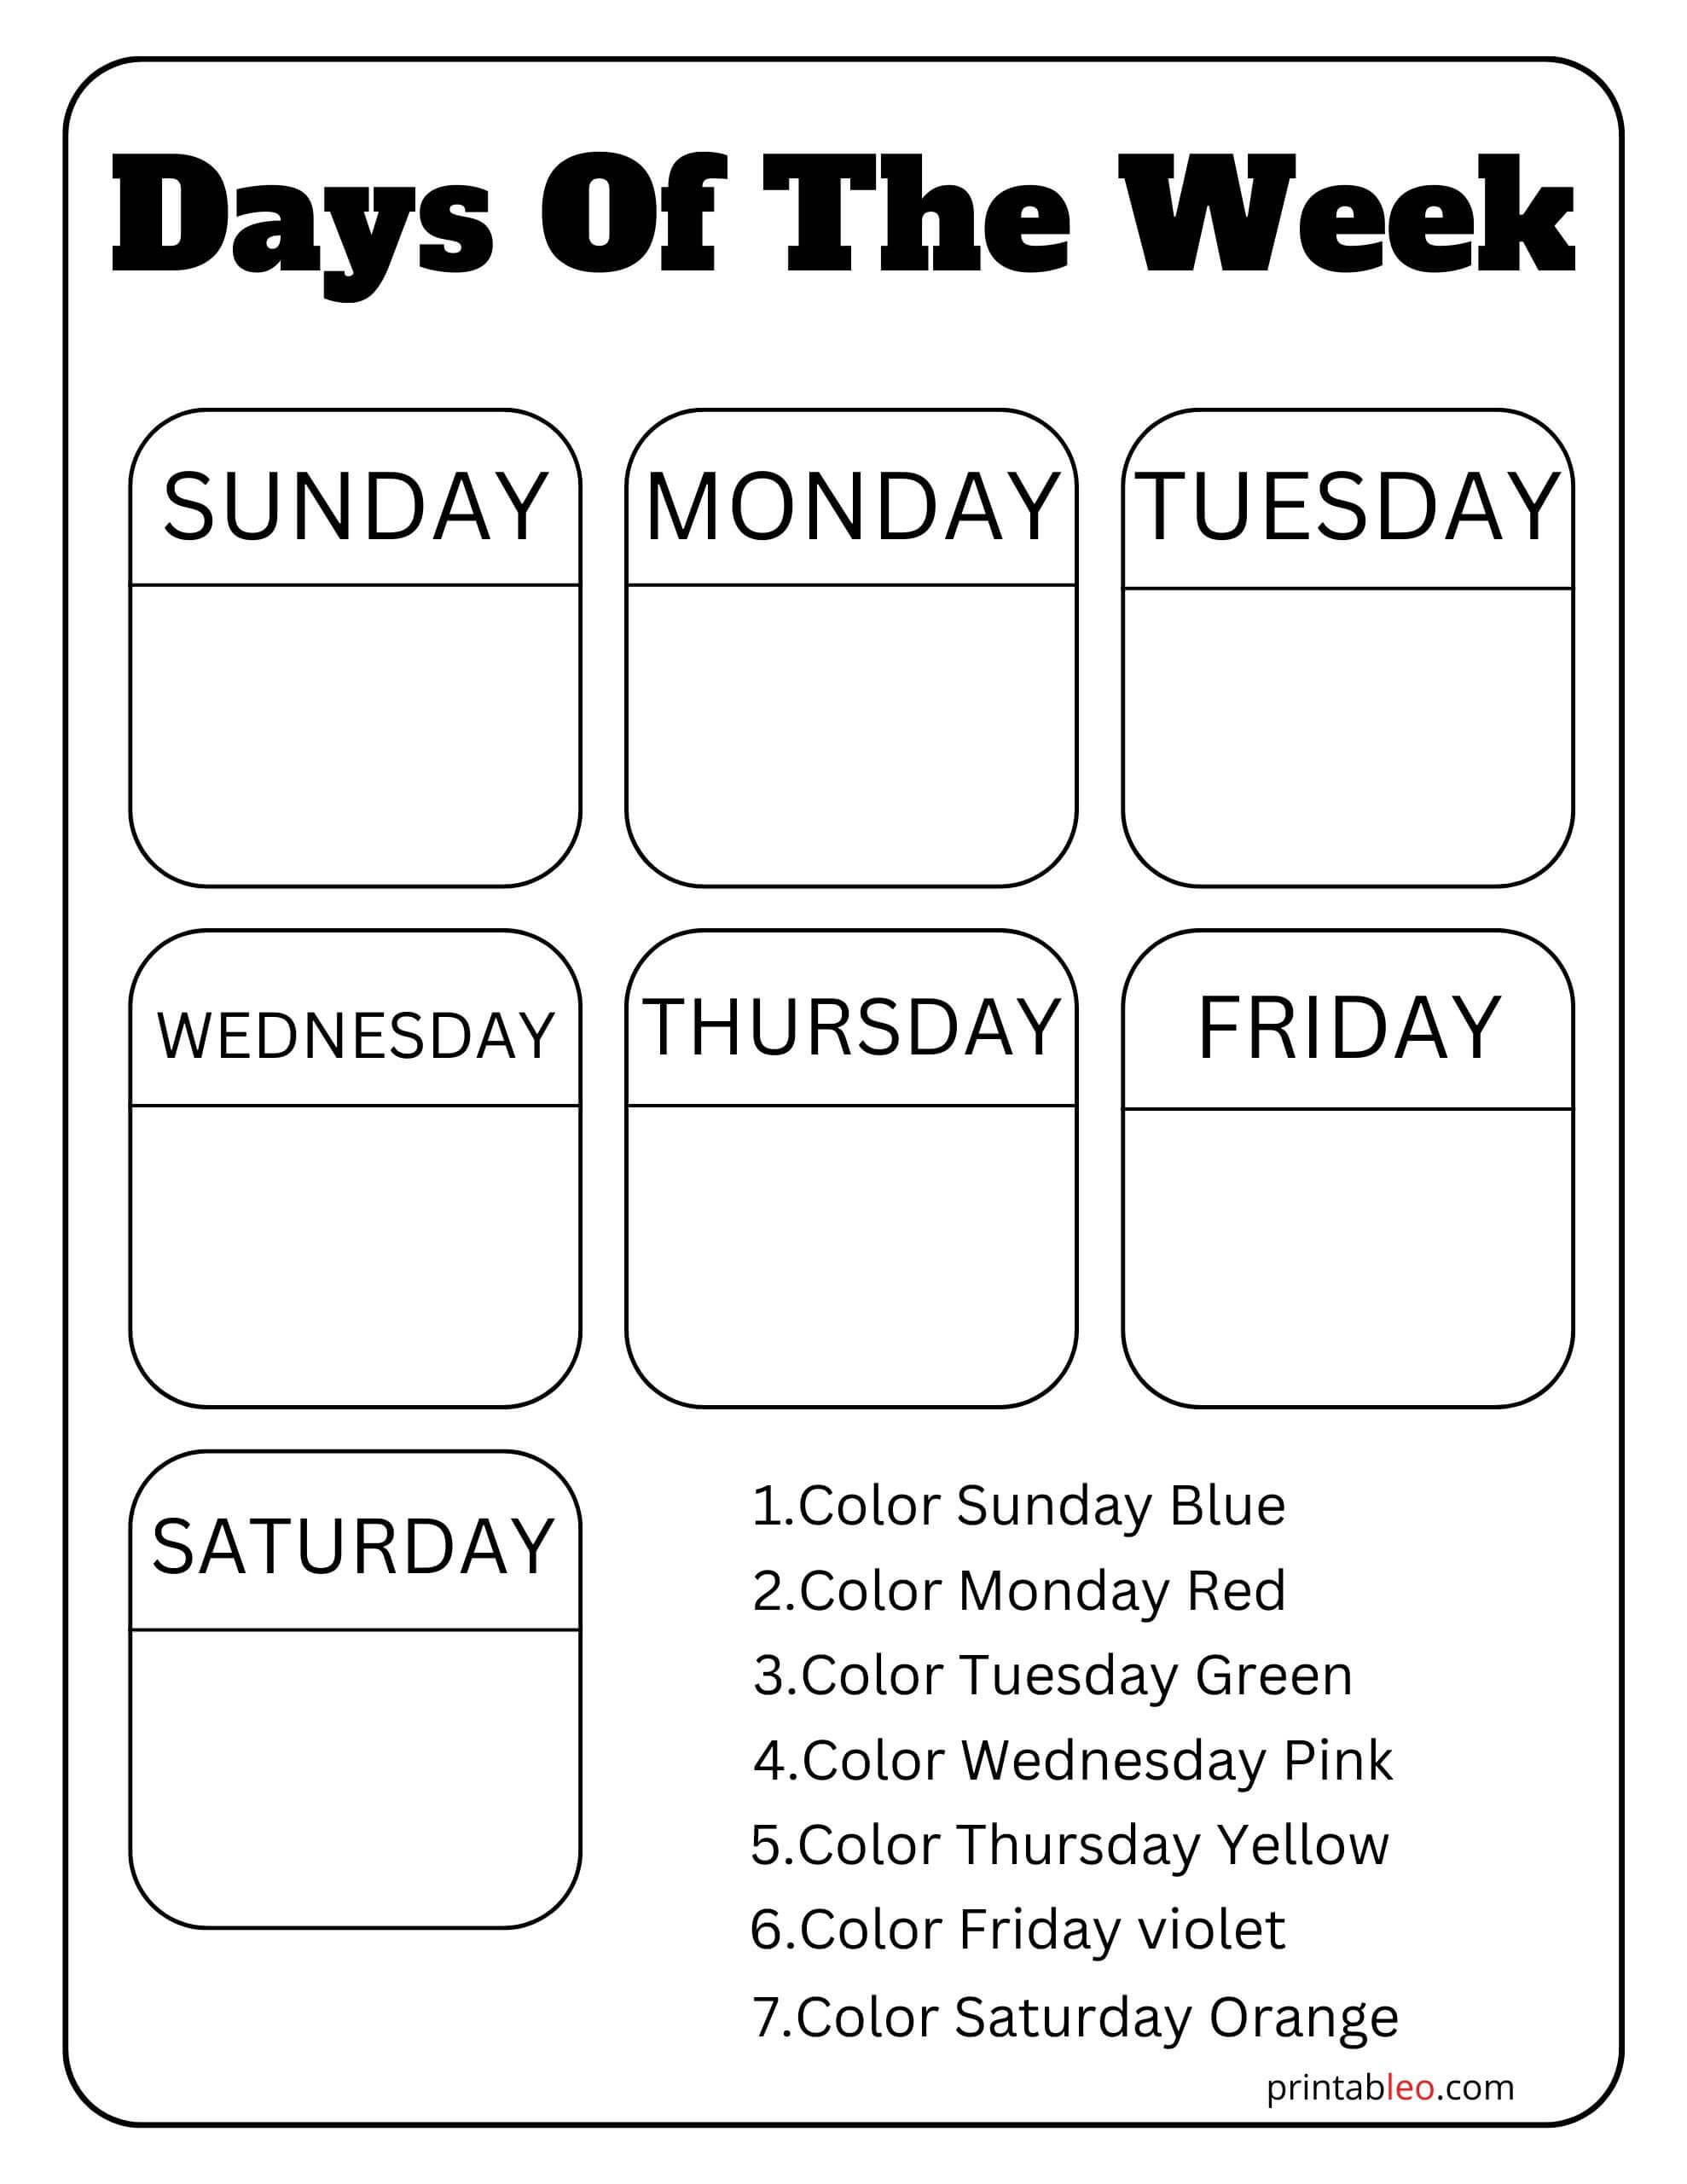 42-days-of-the-weeks-printable-worksheets-printableo-com